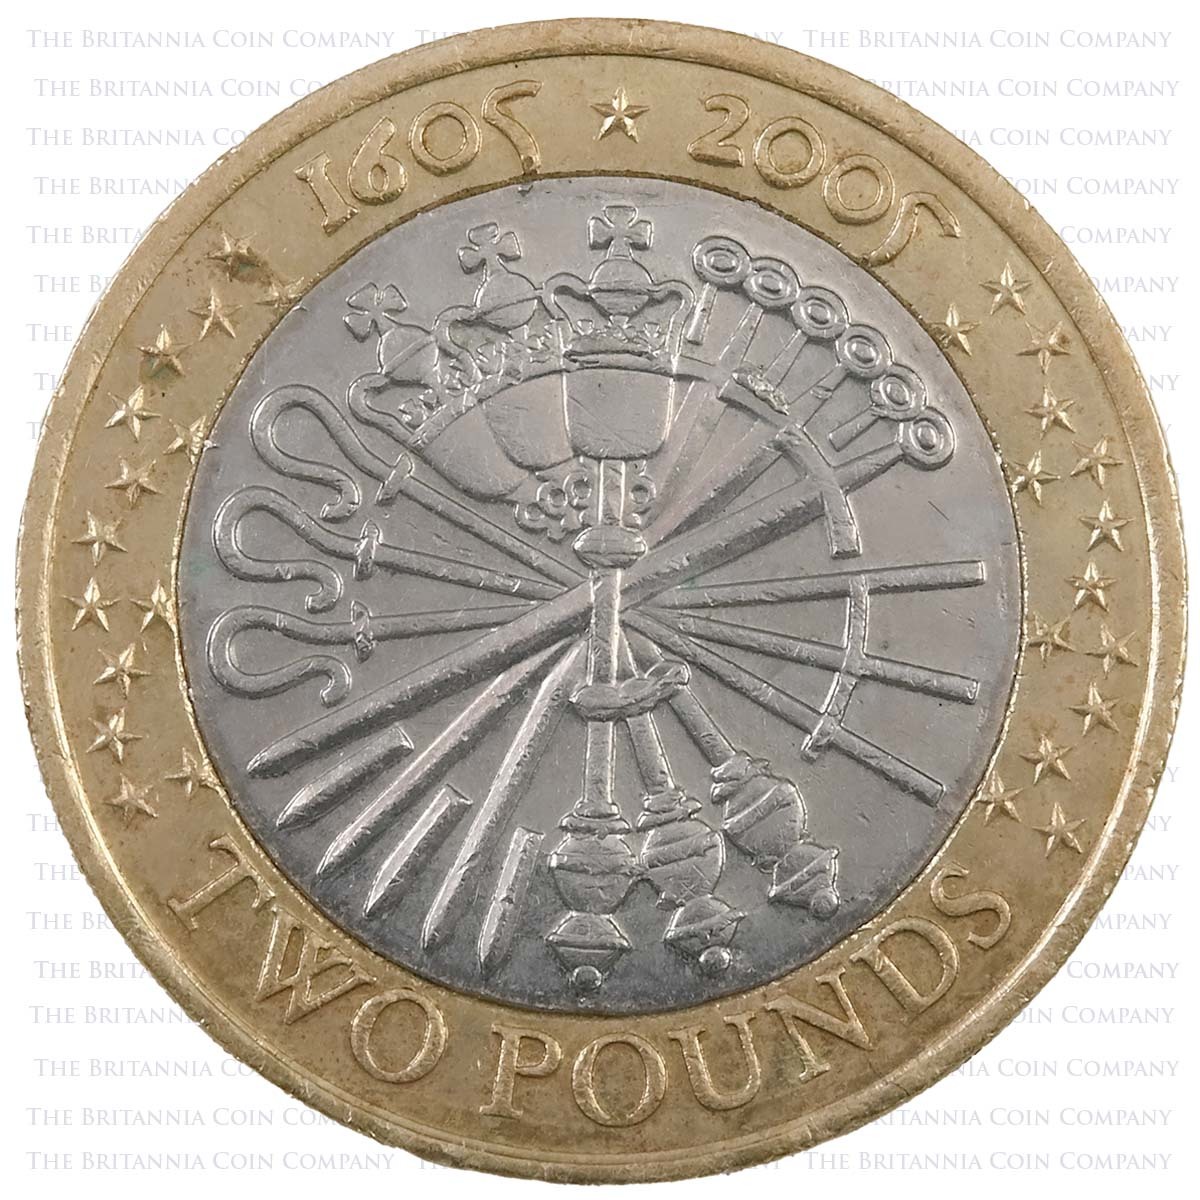 2005 Gunpowder Plot Guy Fawkes Circulated Two Pound Coin Reverse